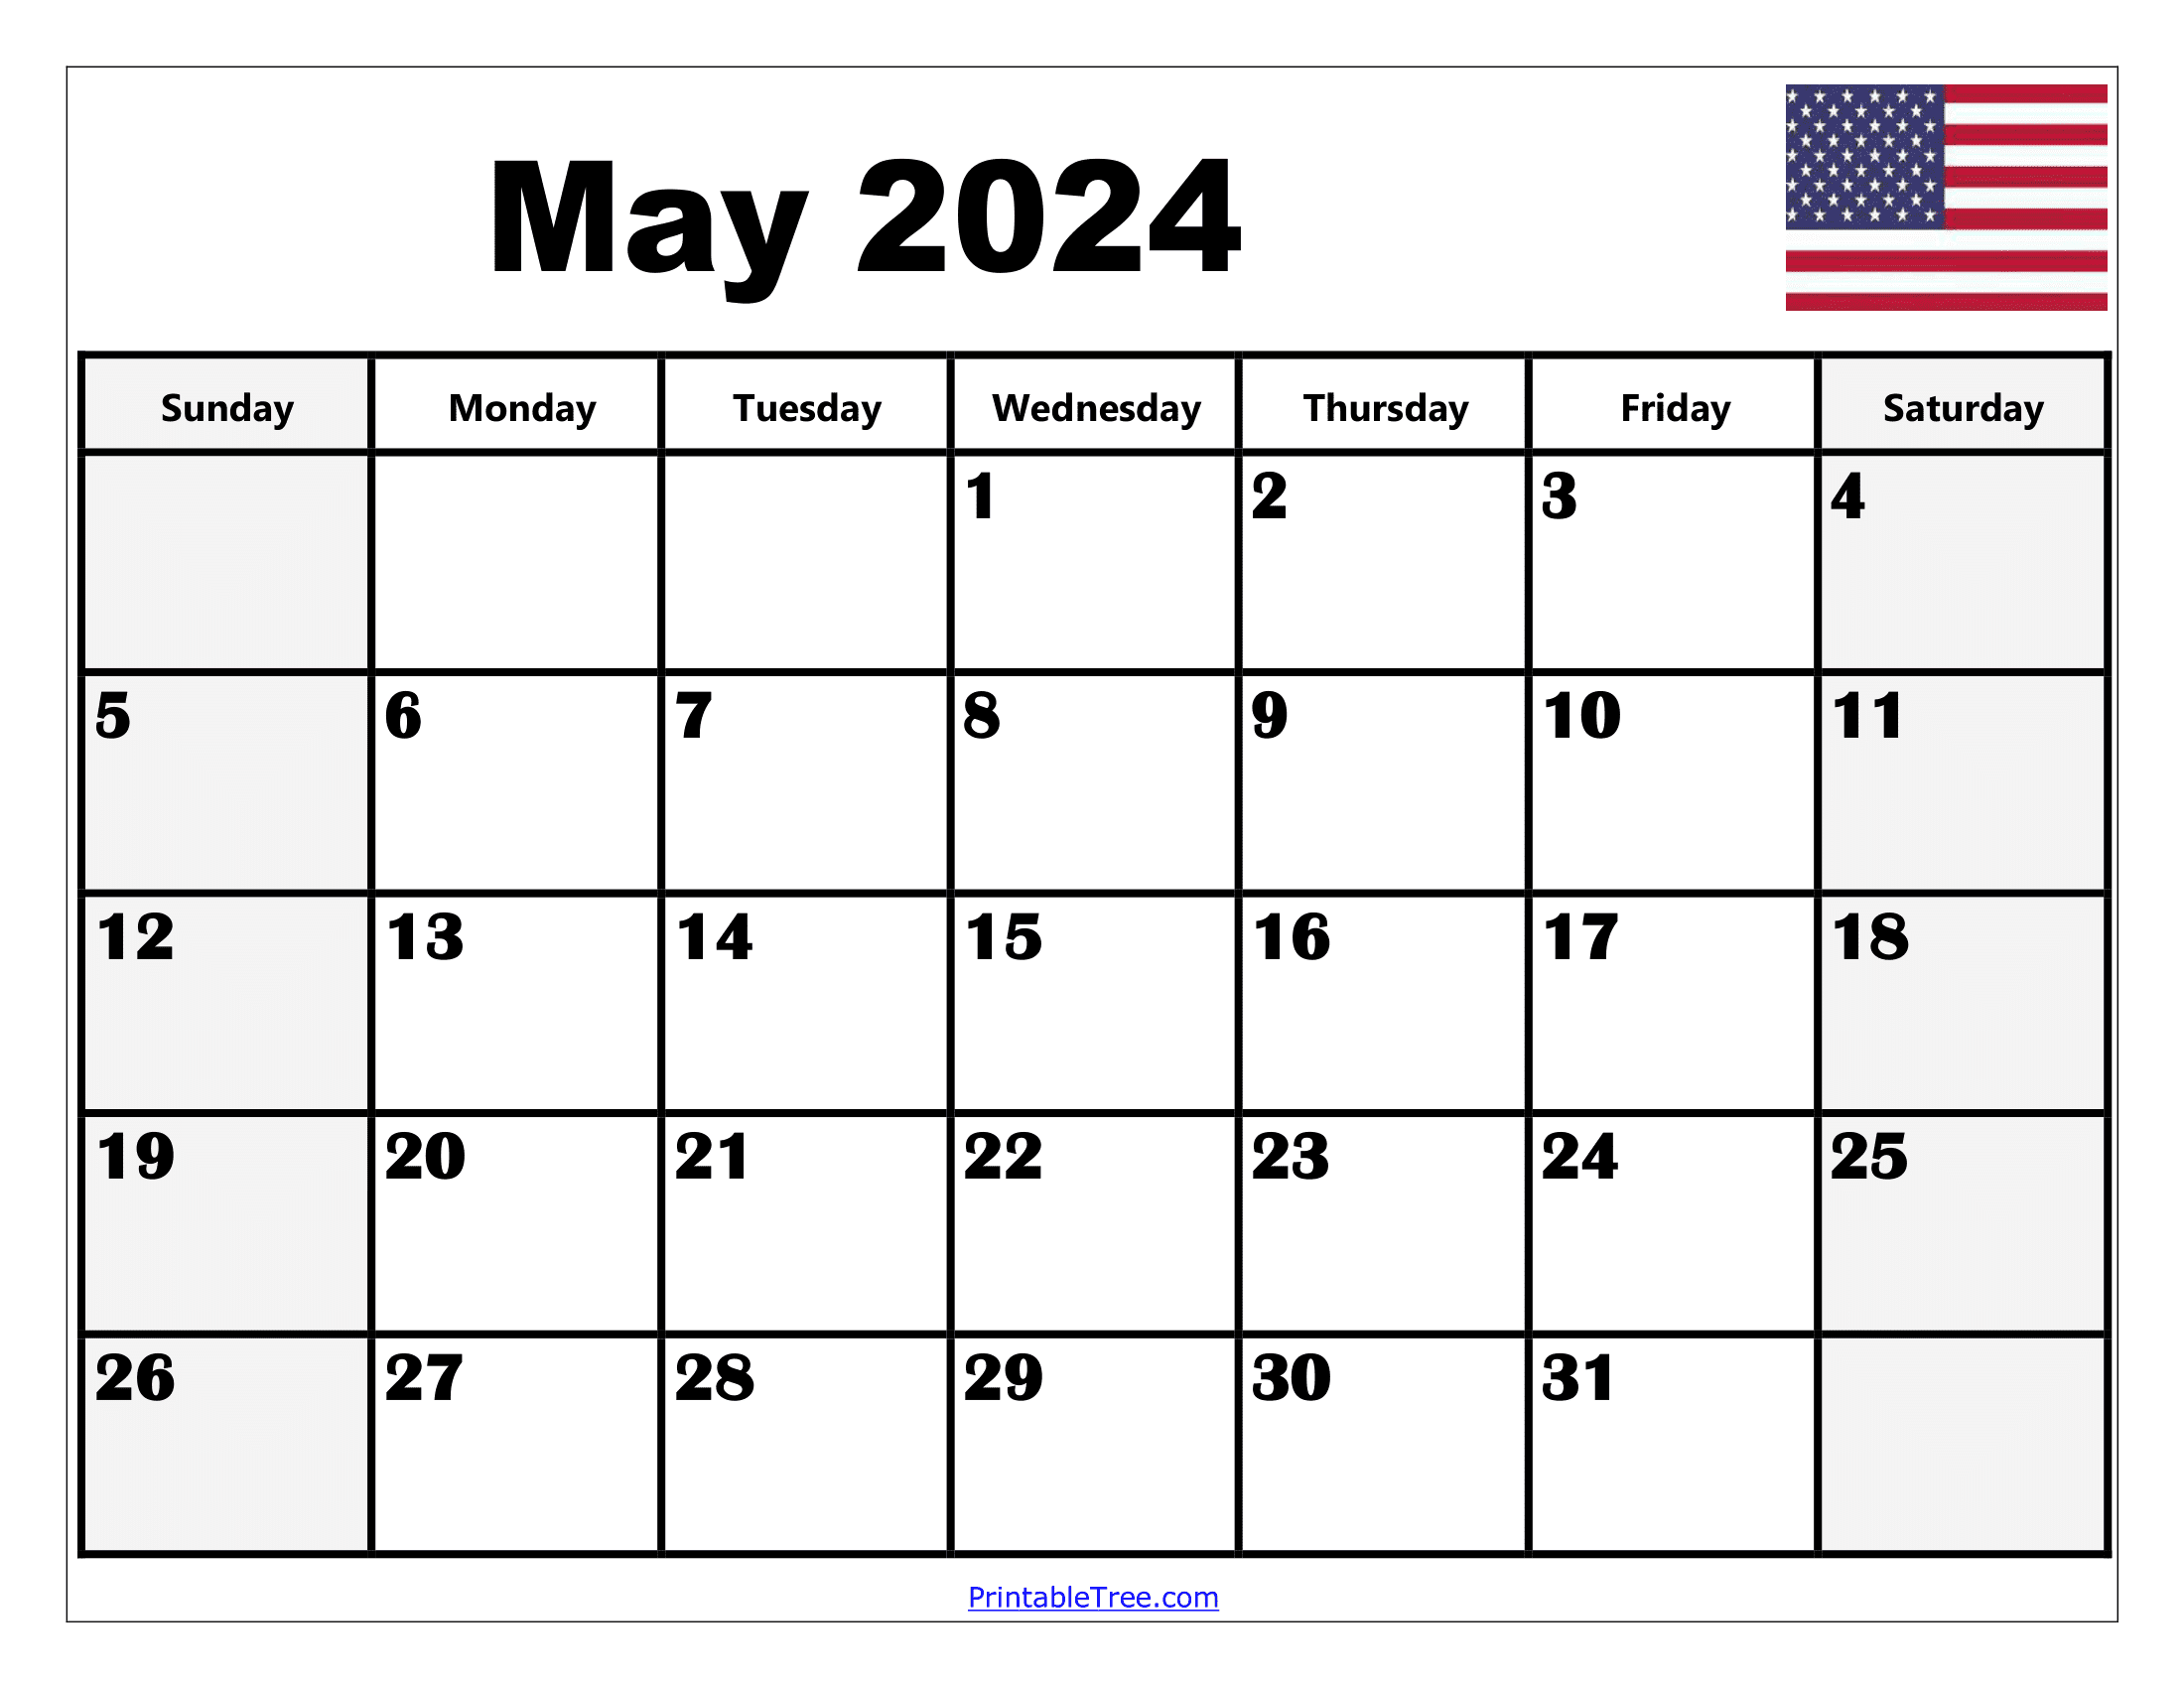 Blank May 2024 Calendar Printable Pdf Templates With Holidays for May 2024 Calendar With Holidays Printable